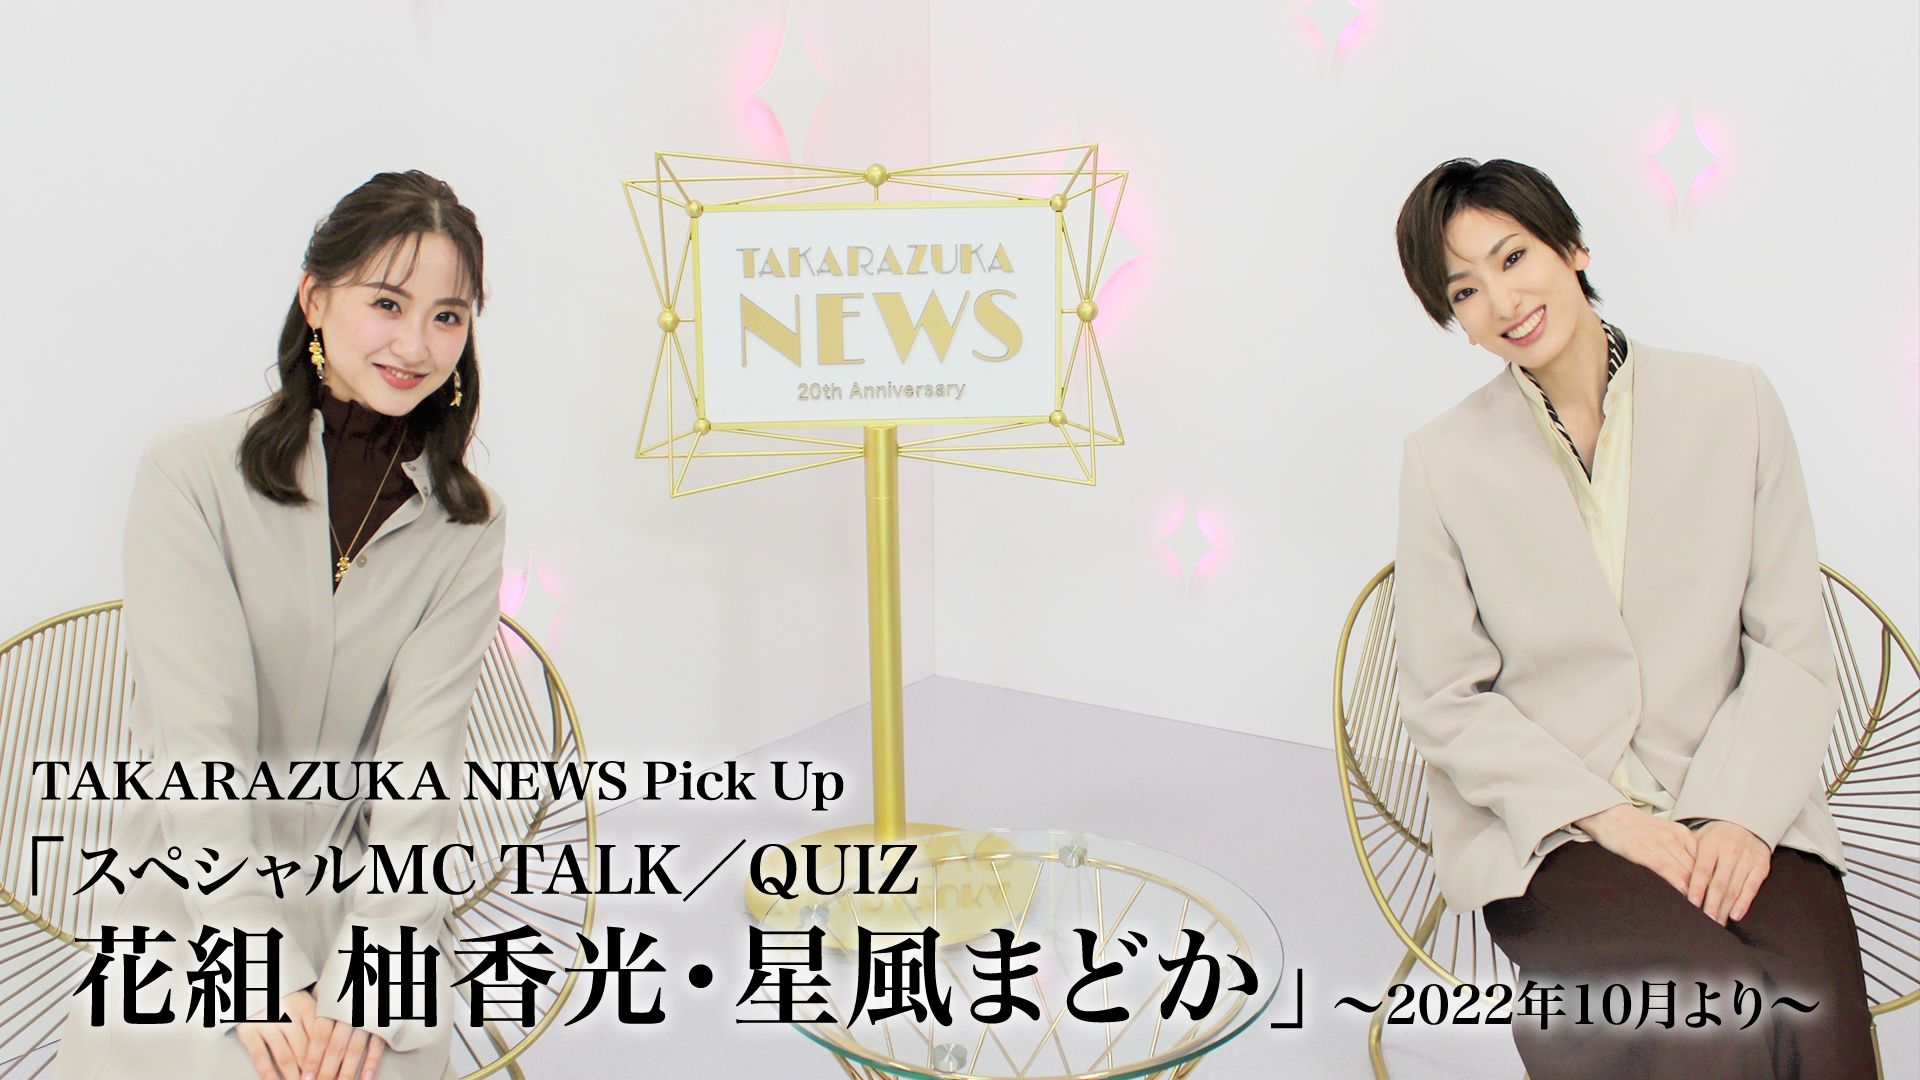 TAKARAZUKA NEWS Pick Up「スペシャルMC TALK/QUIZ 花組 柚香光・星風まどか」〜2022年10月より〜